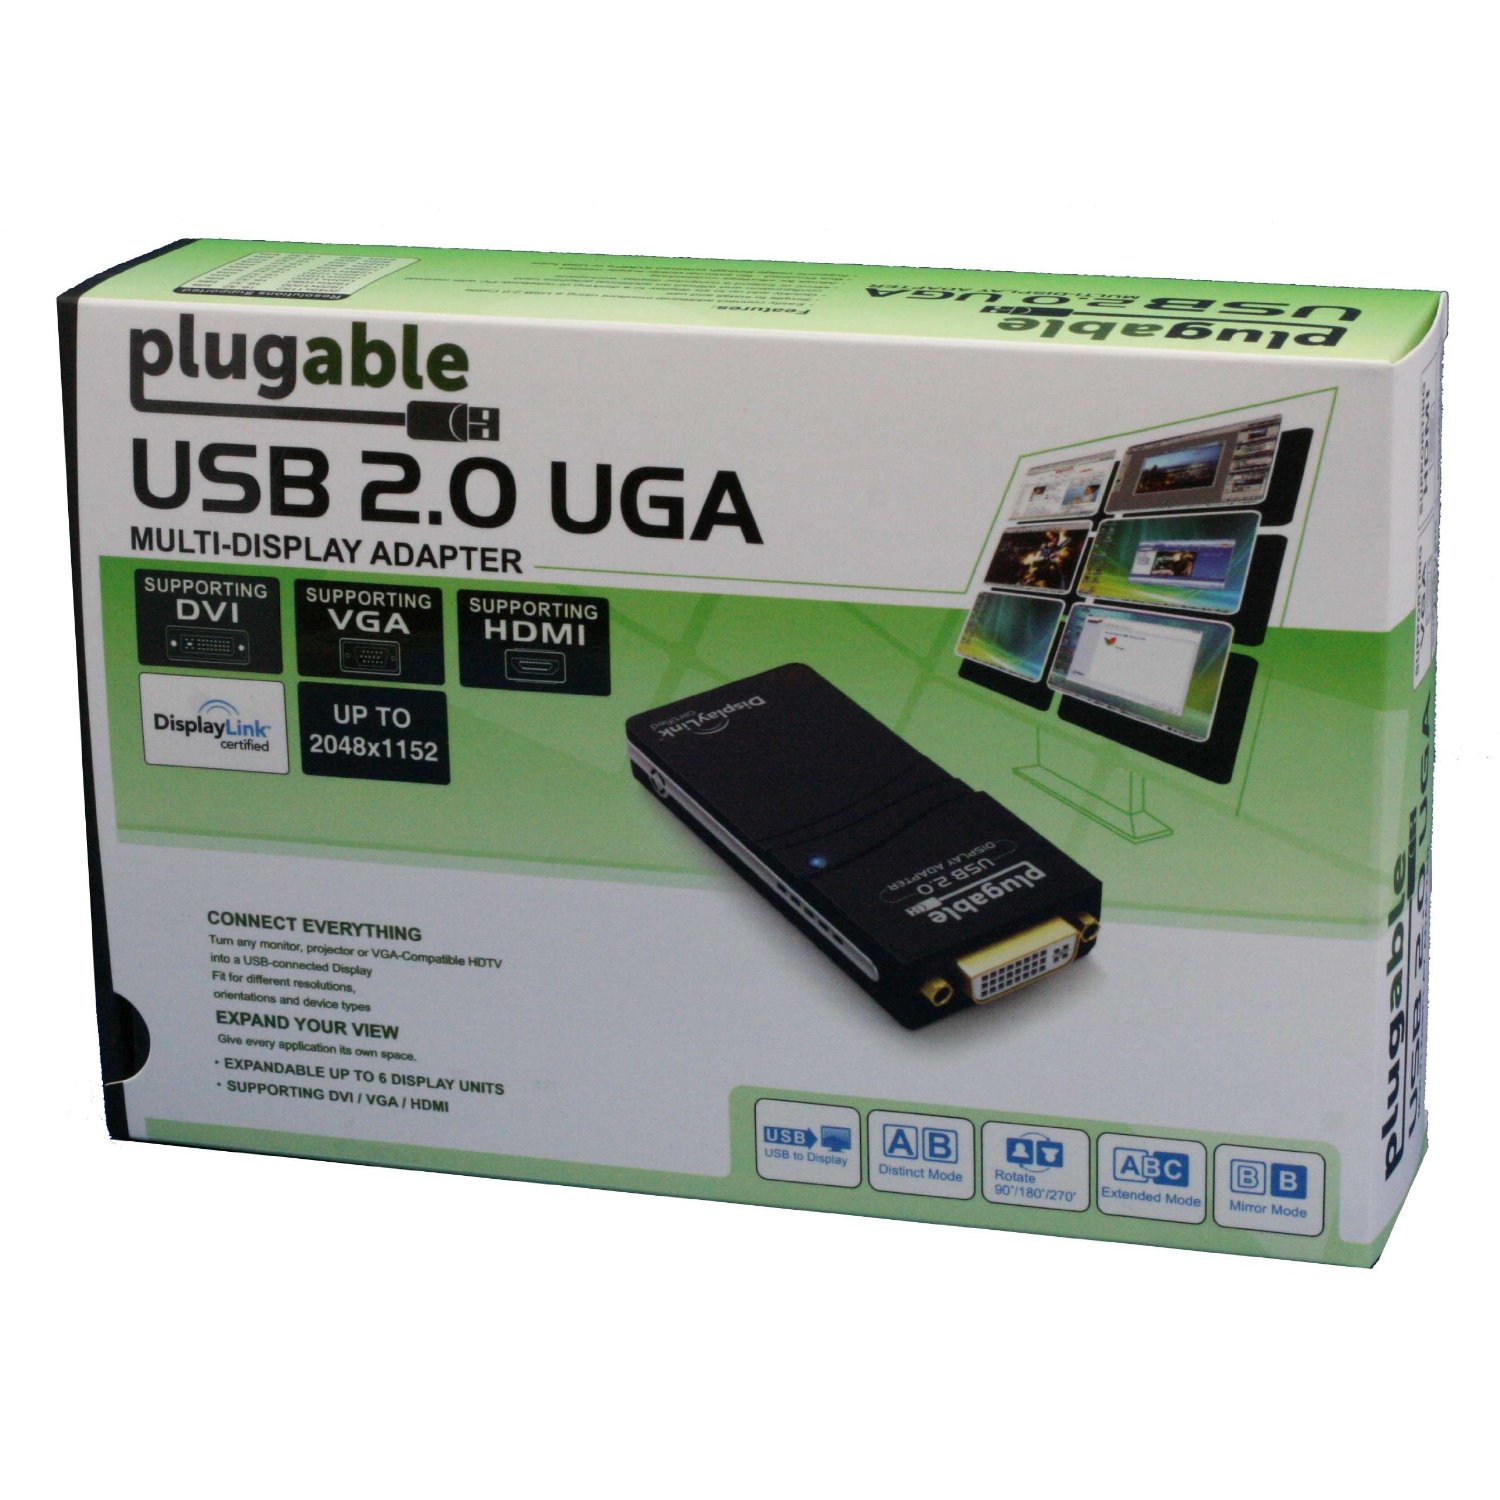 http://thetechjournal.com/wp-content/uploads/images/1201/1325841515-plugable-uga2ka-usb-20-to-vgadvihdmi-adapter-for-multiple-monitors-5.jpg